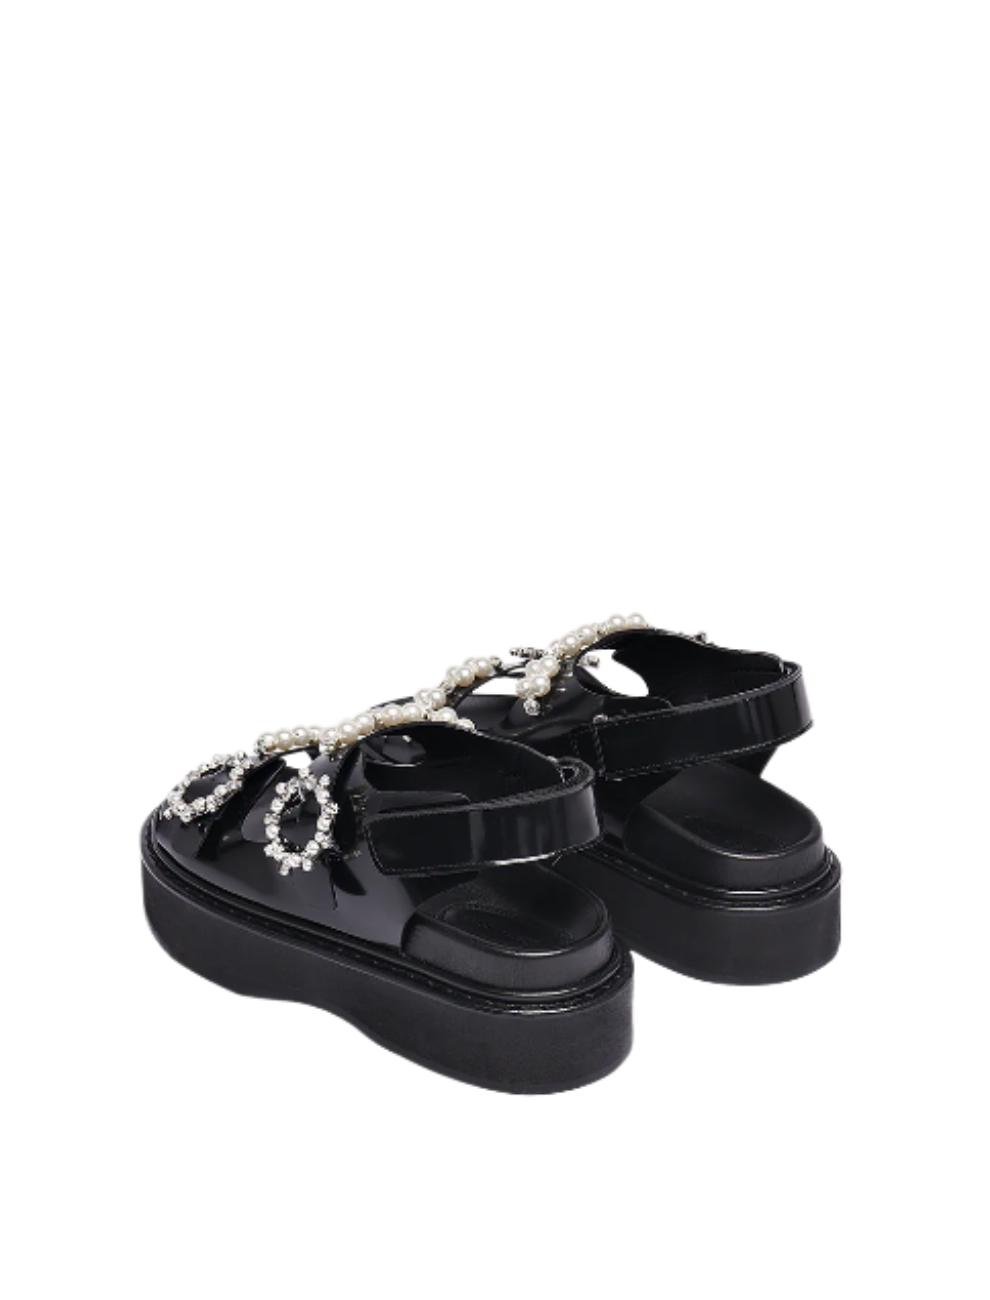 Jewel buckle platform sandals